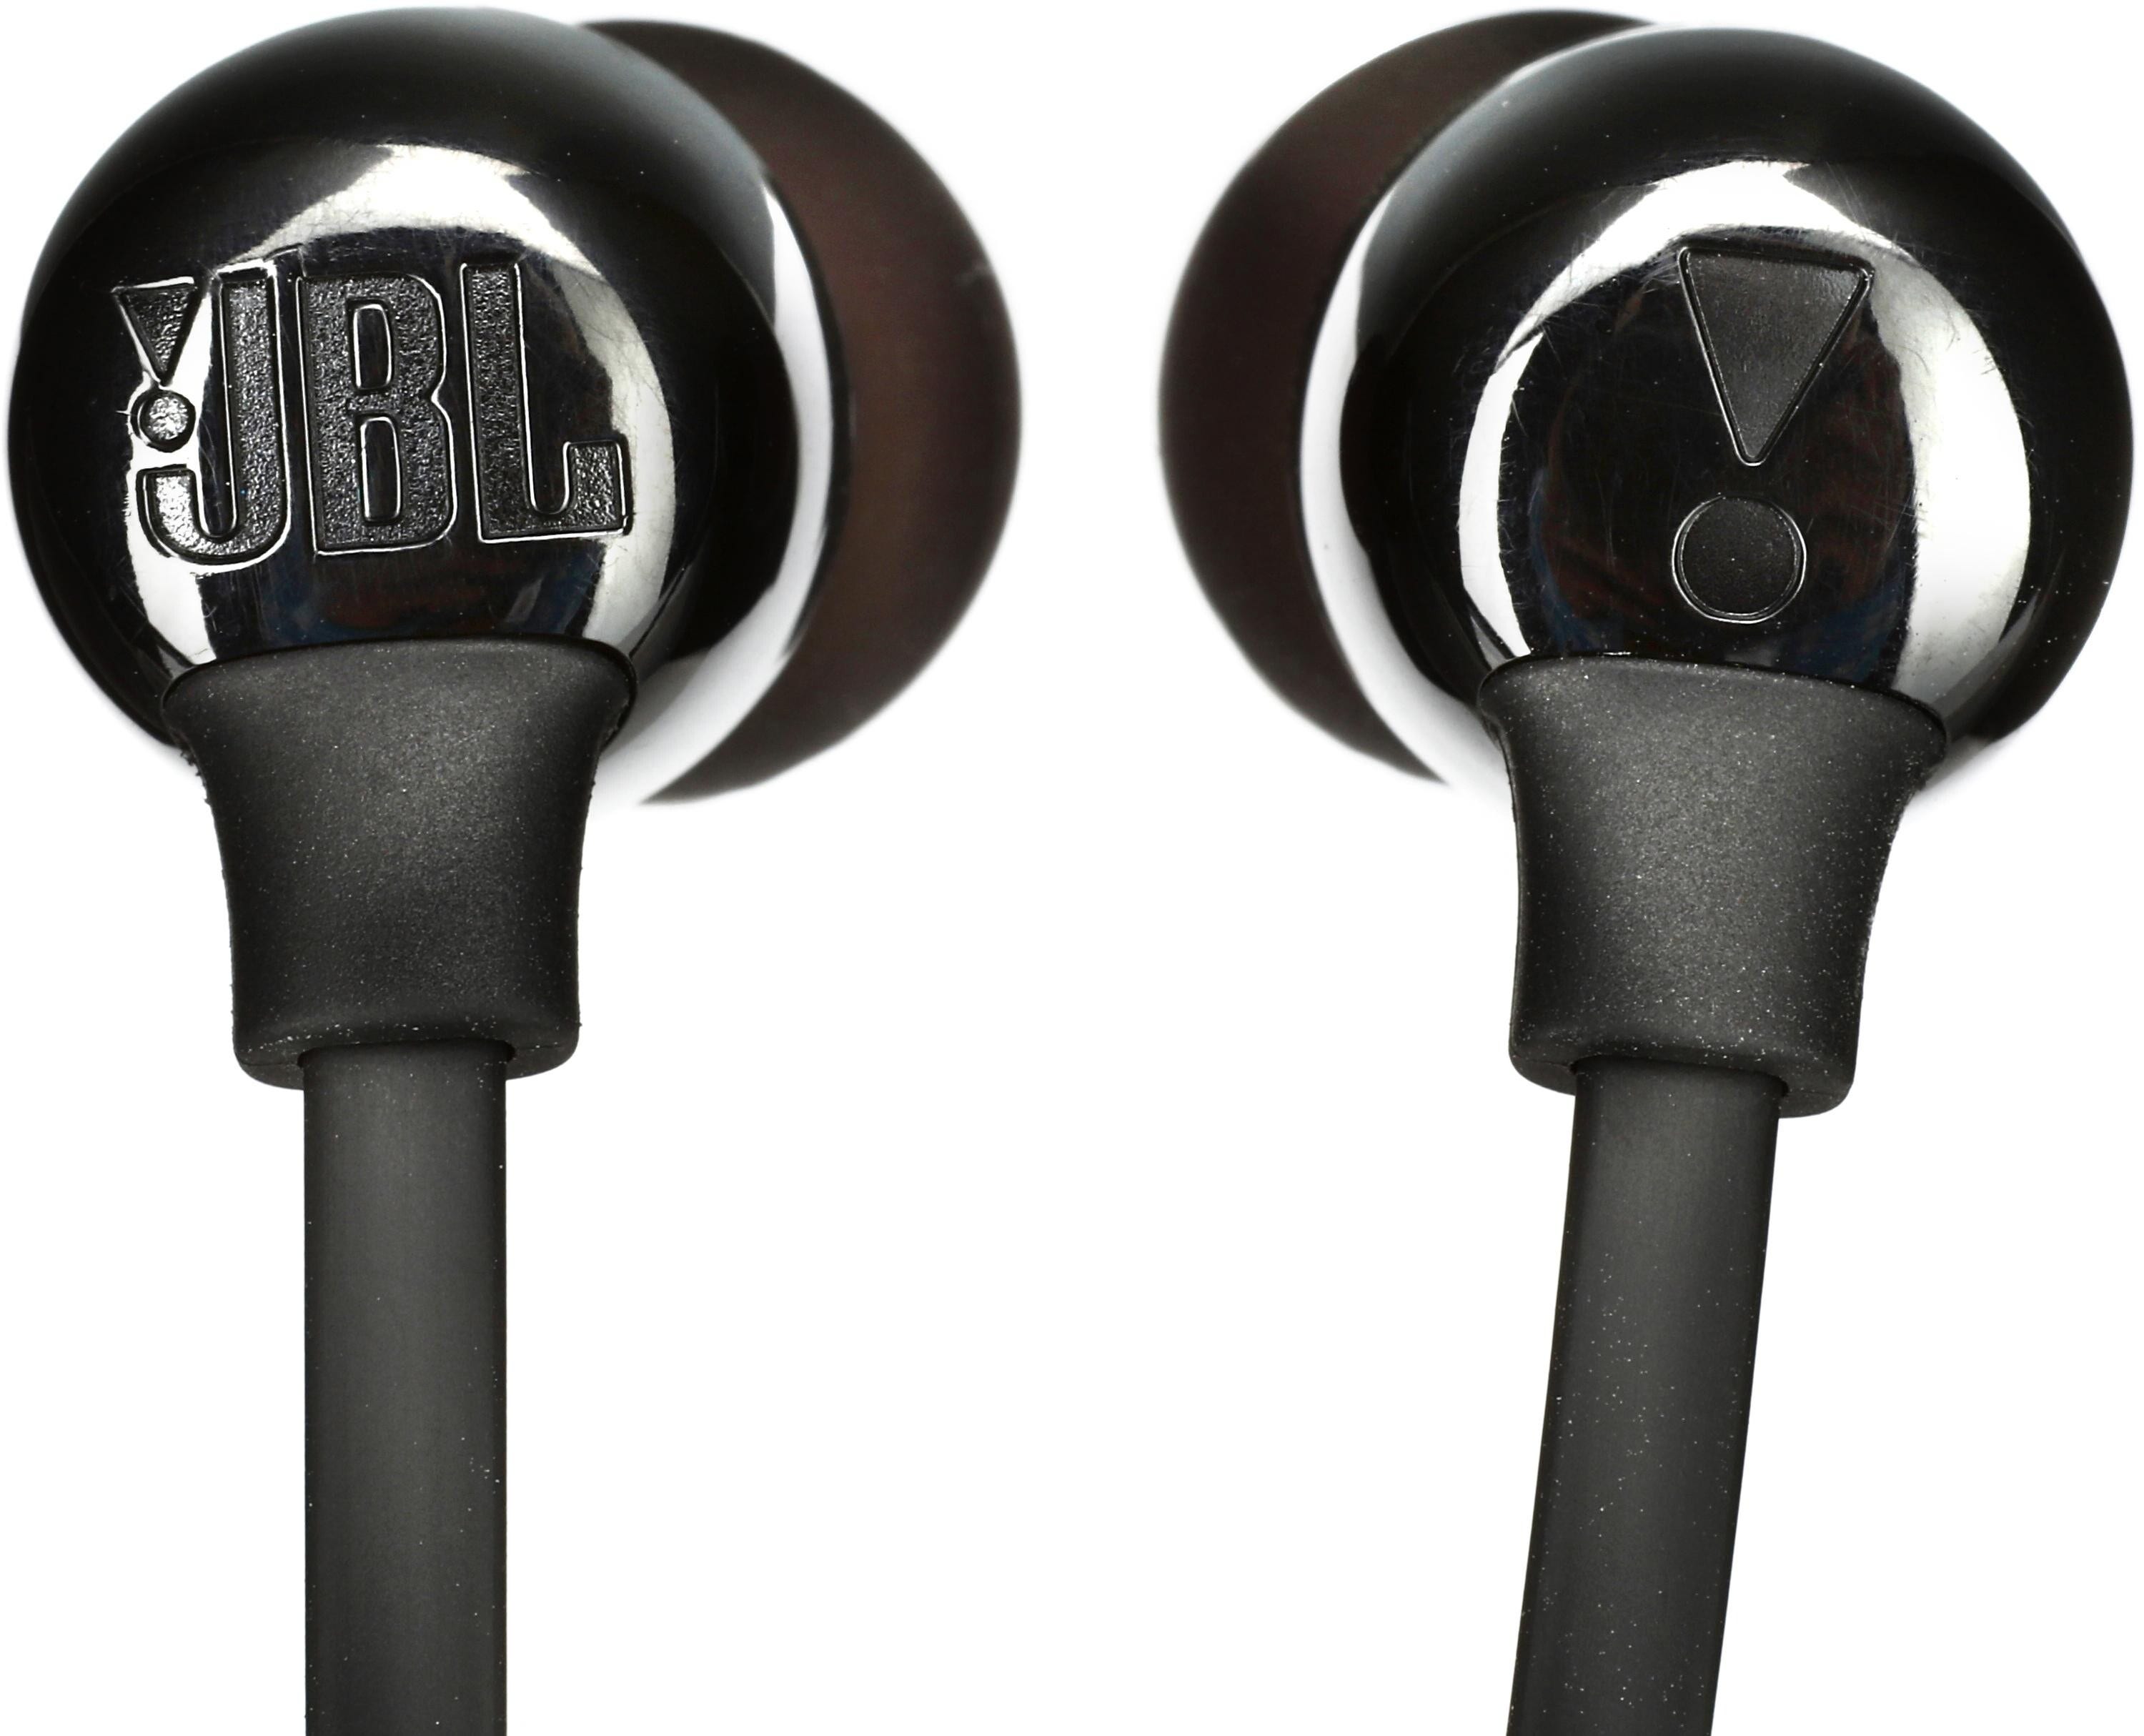 JBL T110 In-Ear Headphones User Guide